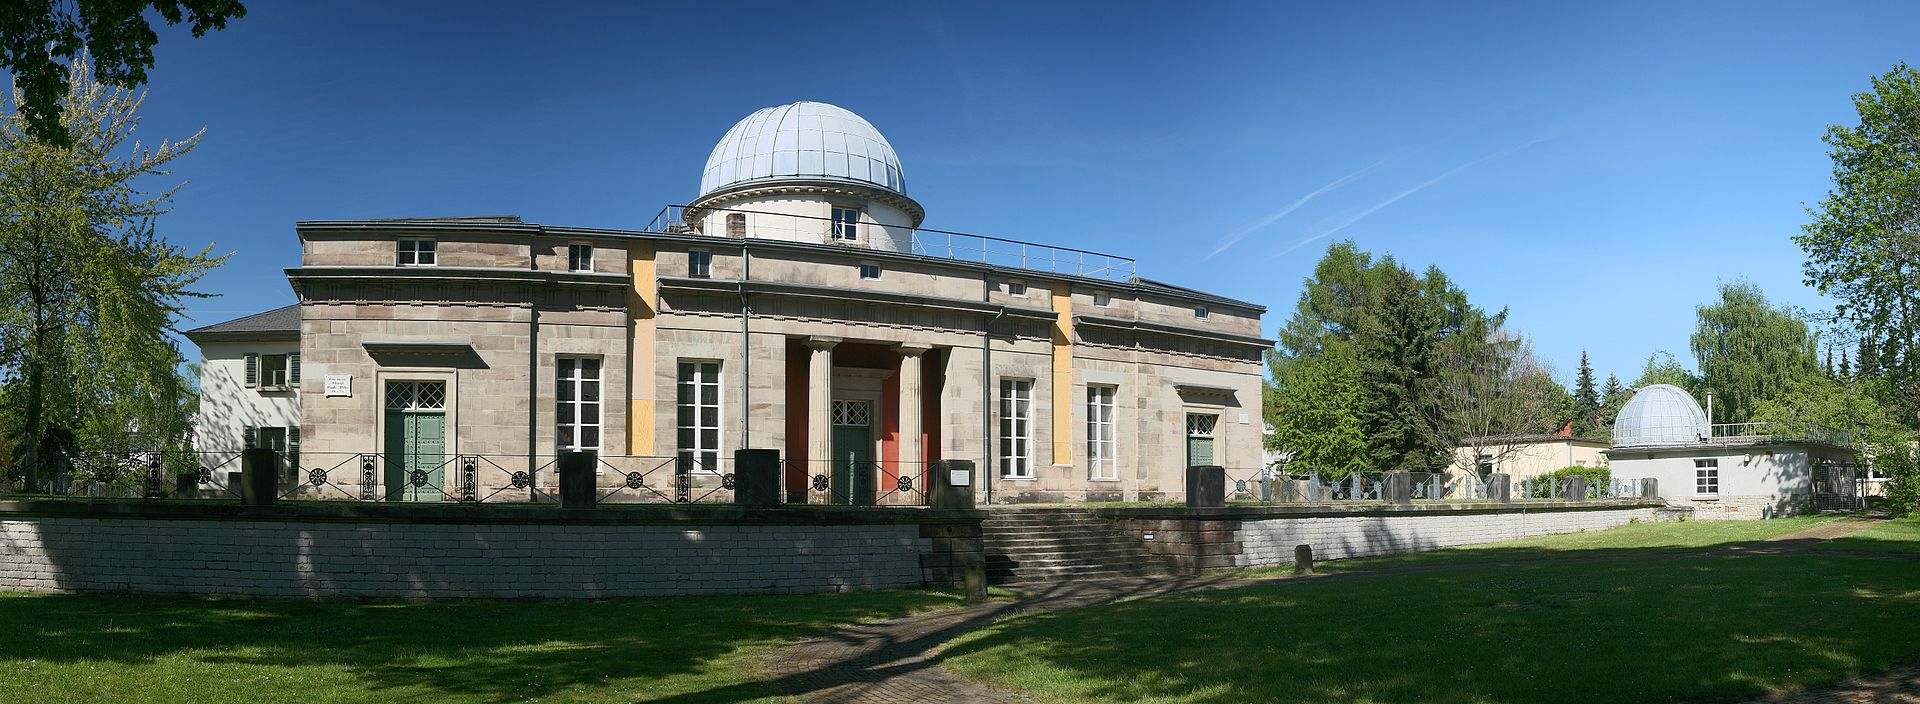 Foto: Observatory of the university; https://commons.wikimedia.org/wiki/File:Goe_Sternwarte_pano.jpg